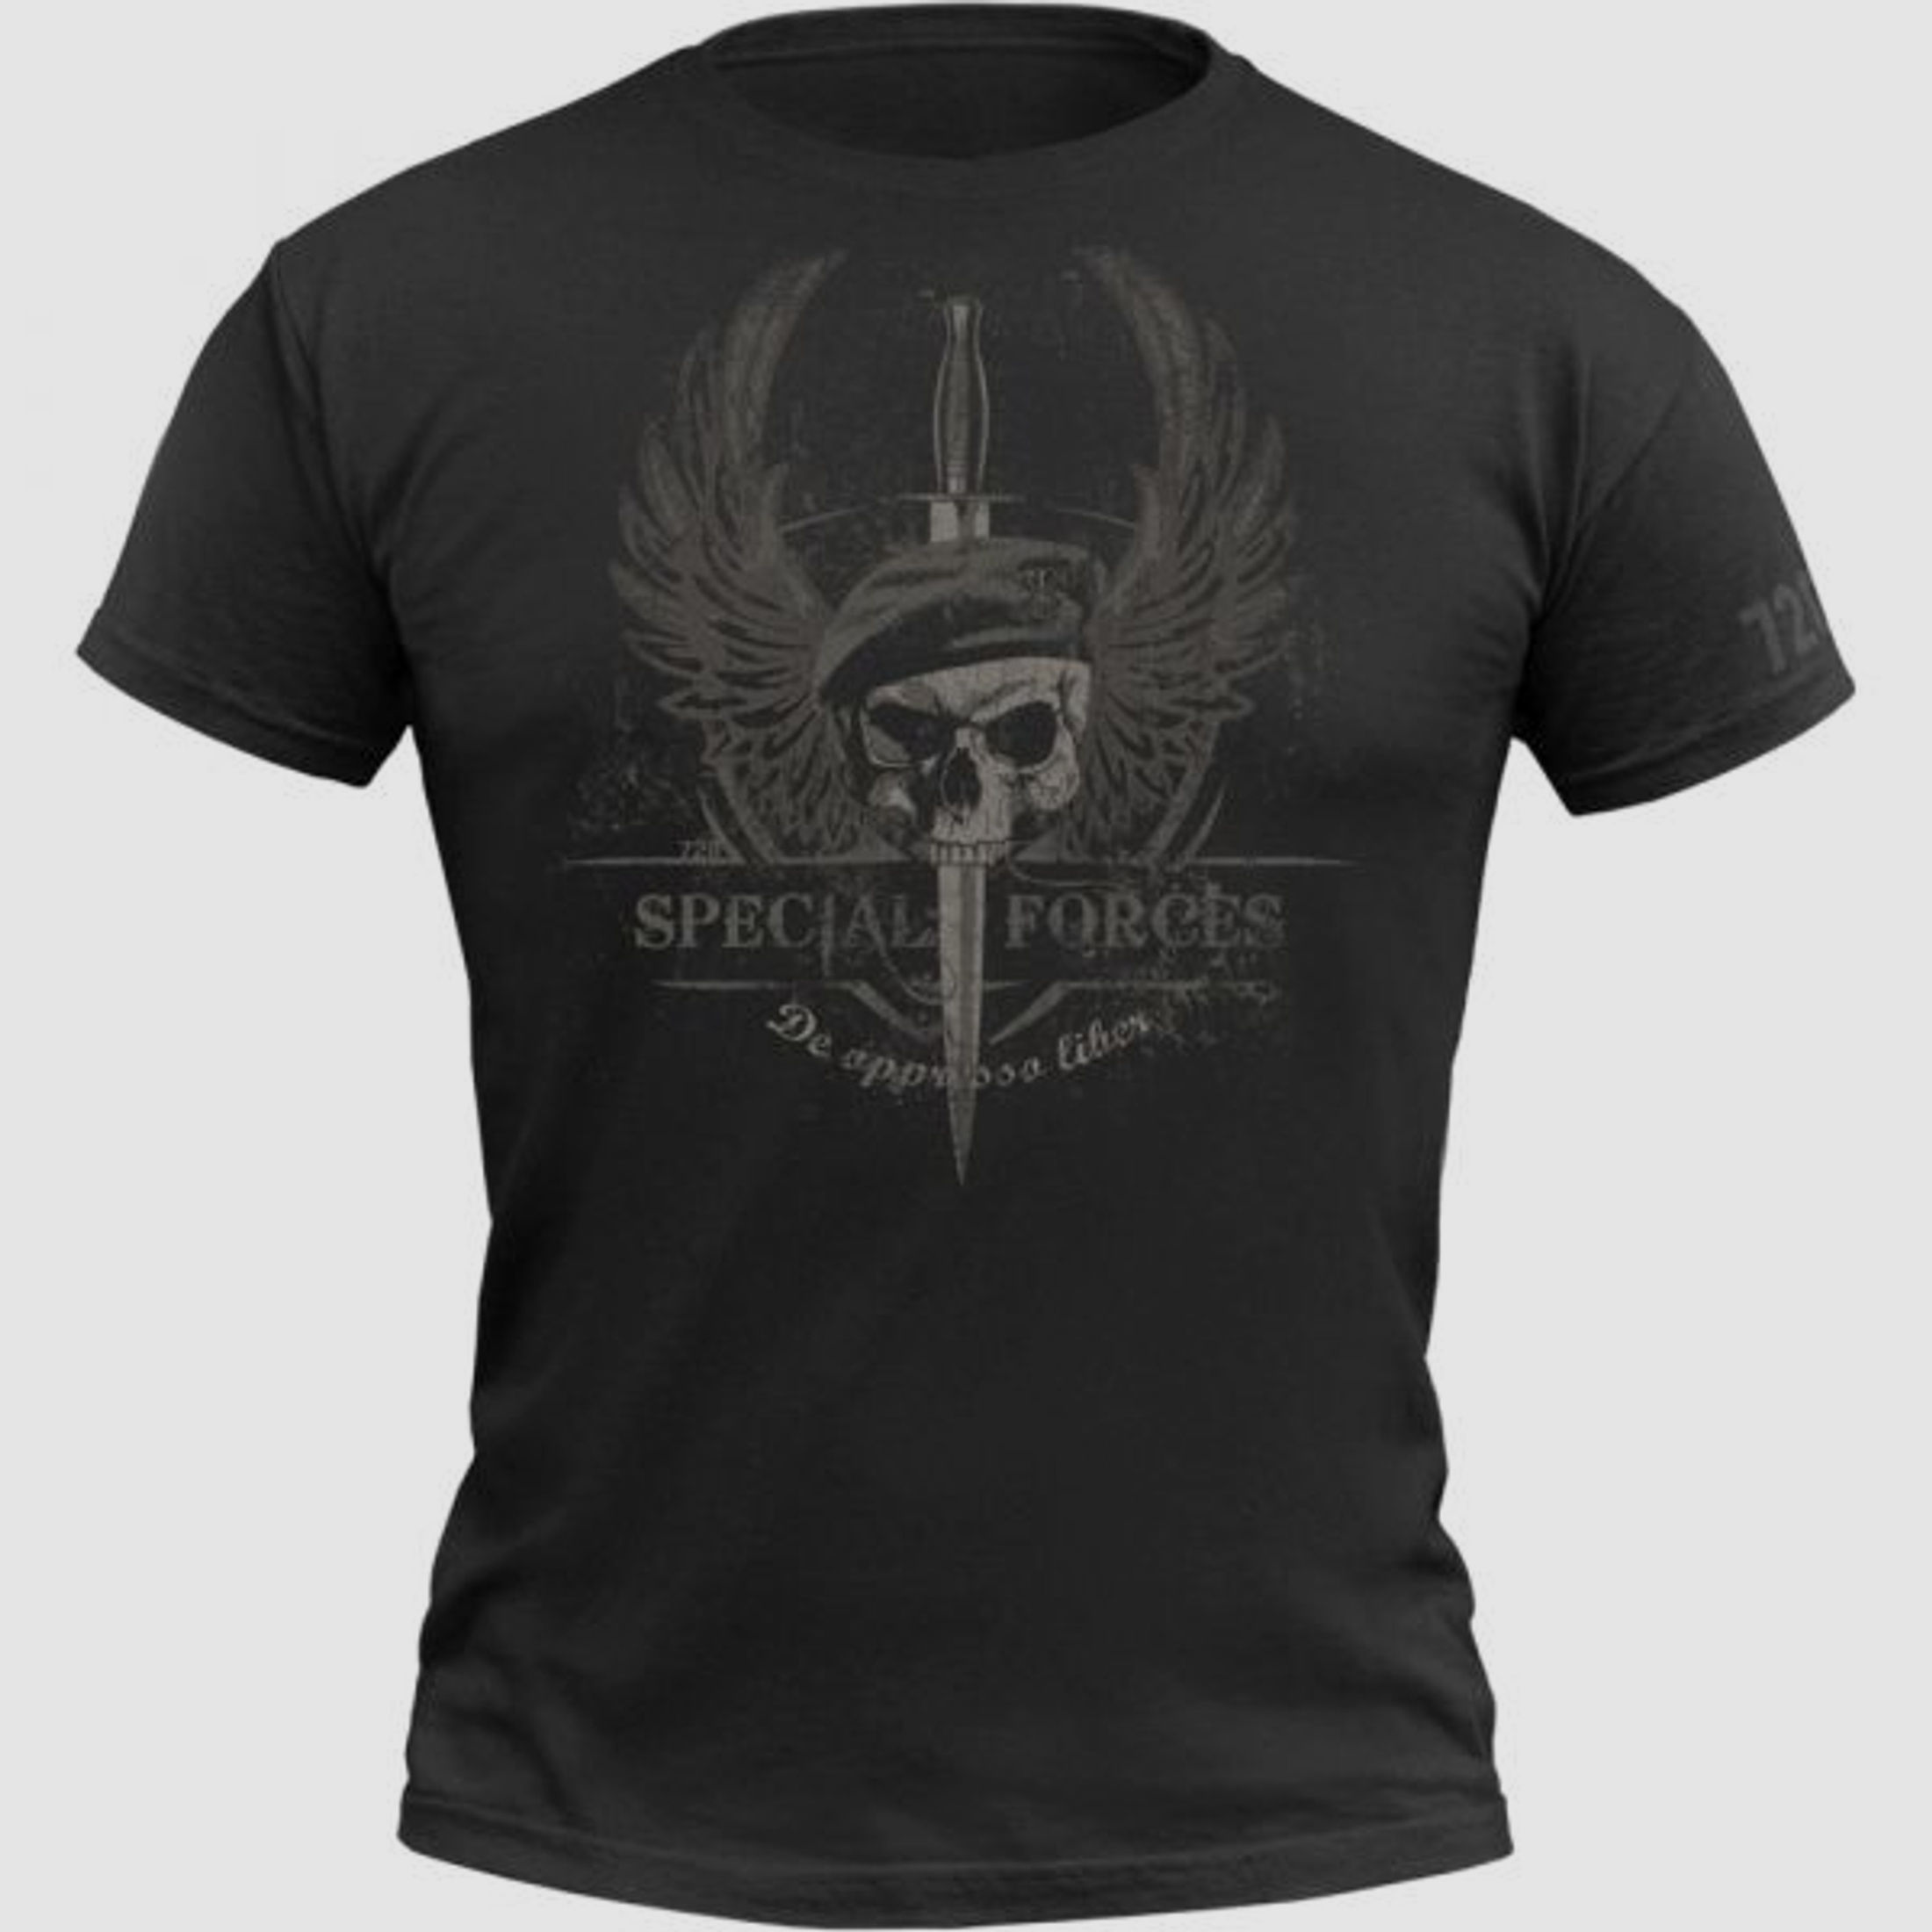 720gear 720gear T-Shirt Special Forces schwarz